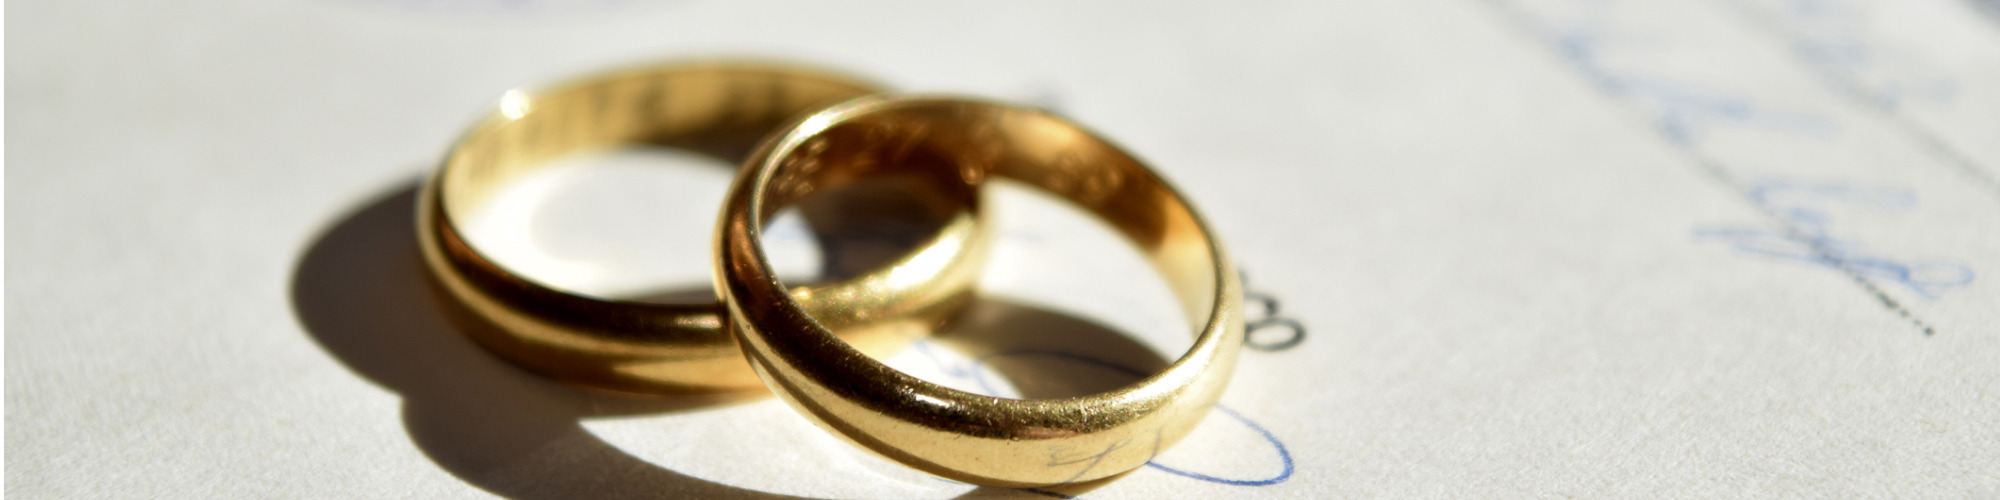 Matrimonial & Non-Matrimonial Resources in Divorce - Tips, Guidance & Caselaw